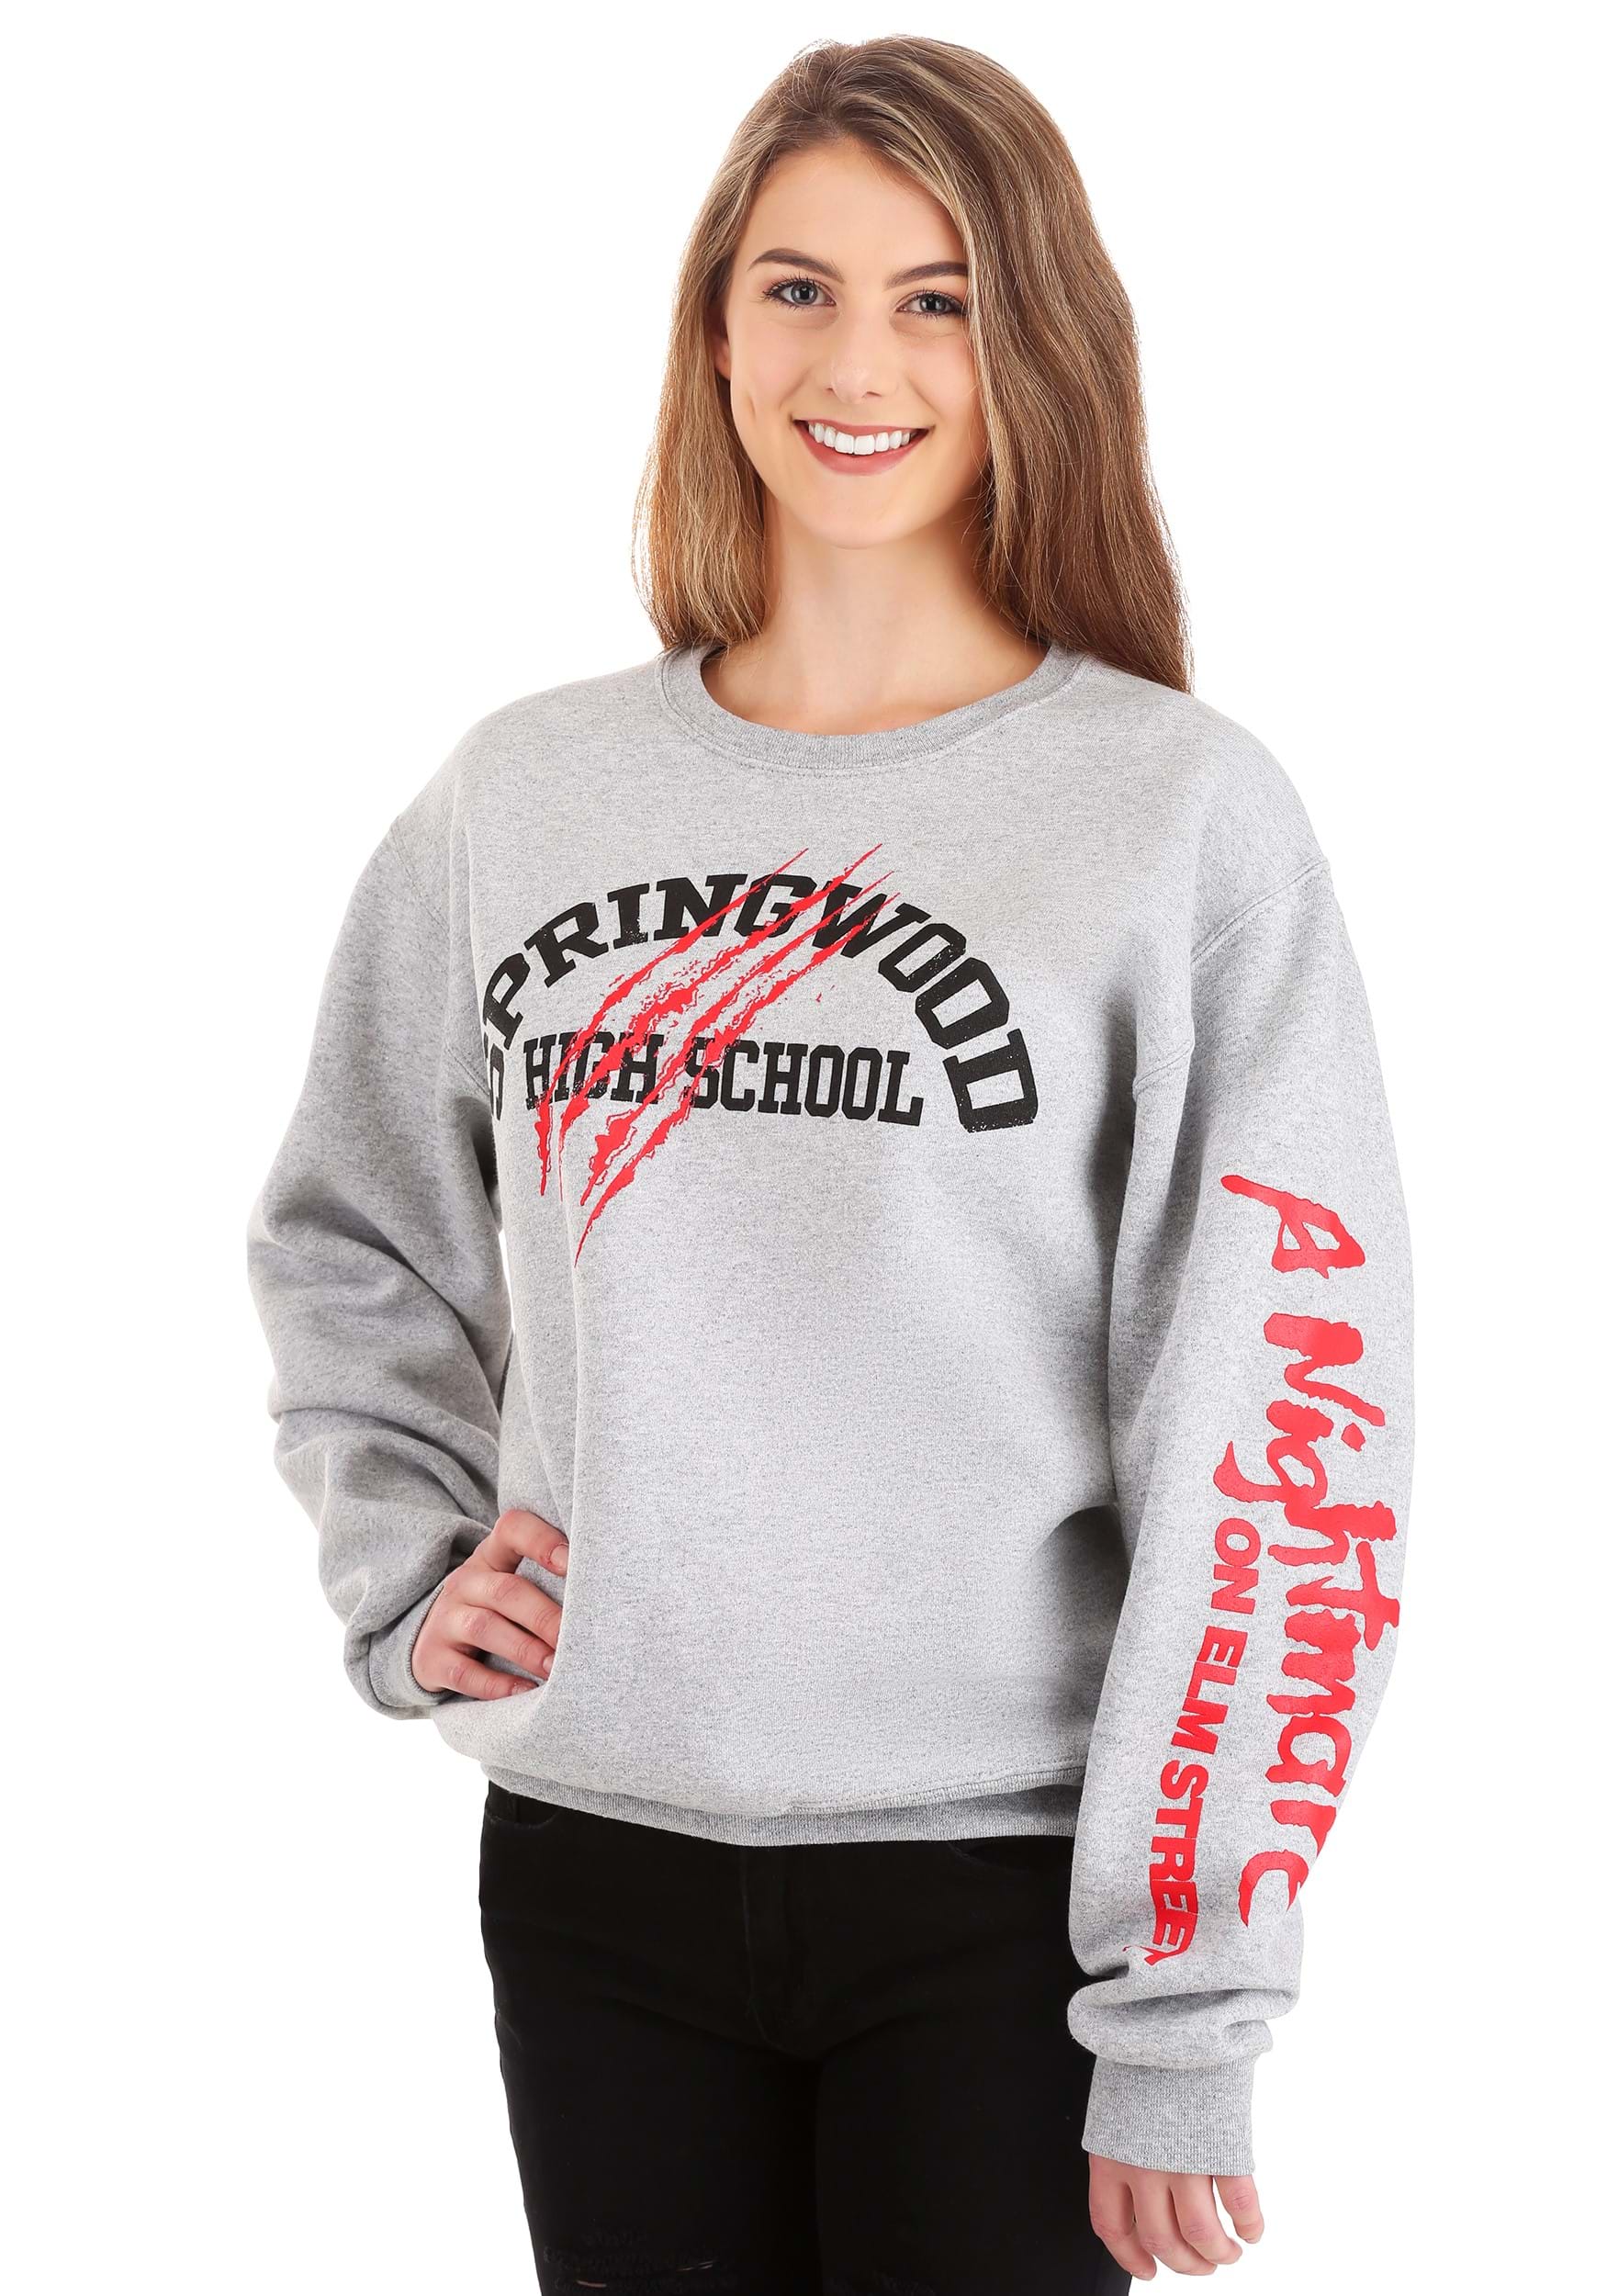 Springwood Nightmare on Elm Street High School Sweatshirt